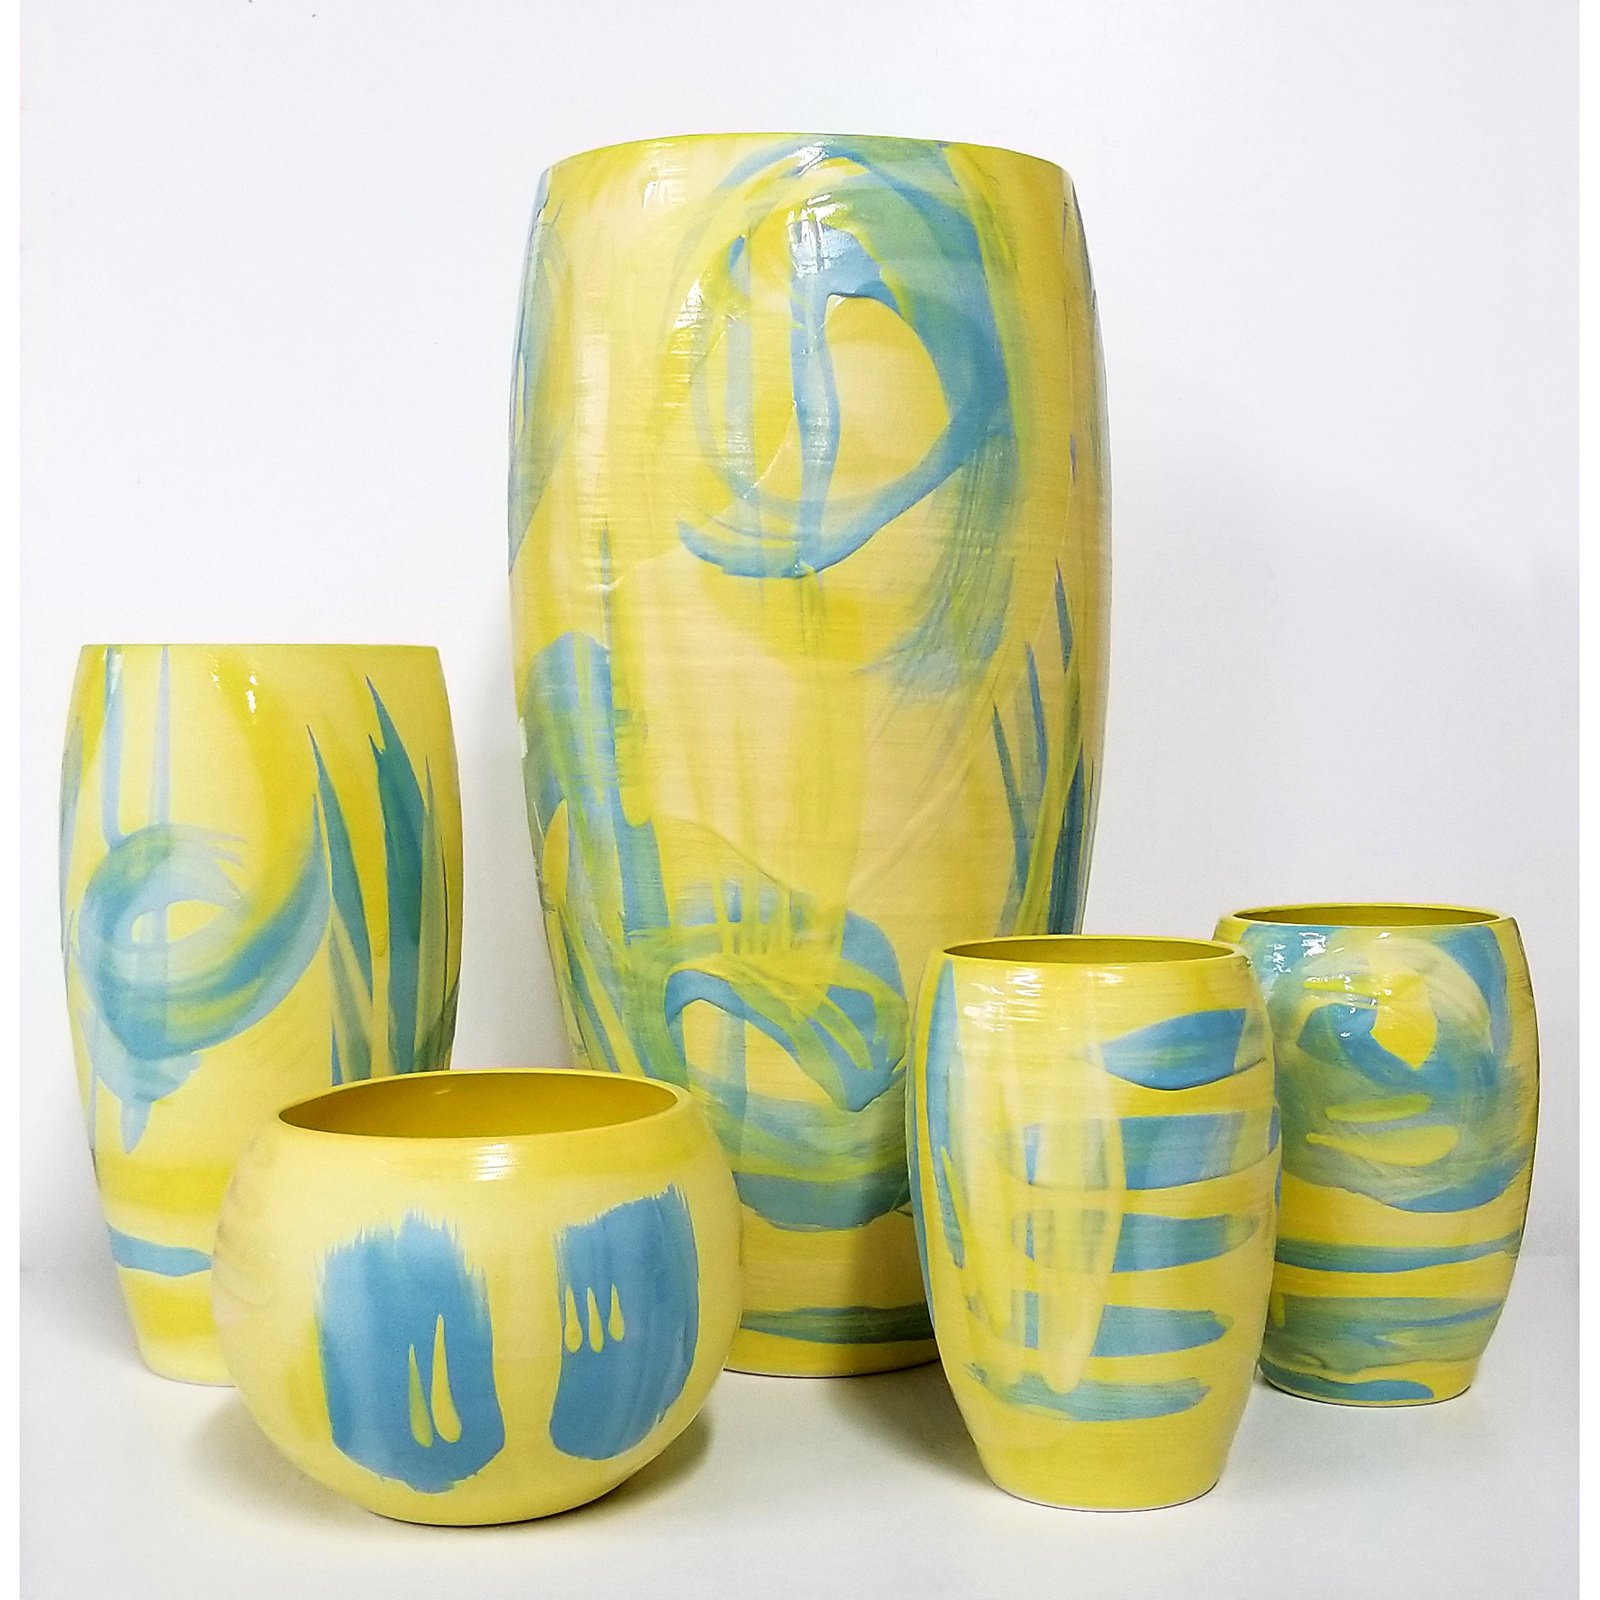  Title: Ting Zing Series, yellow-turquoise vases Medium: Ceramic Prices: £140 - £320   